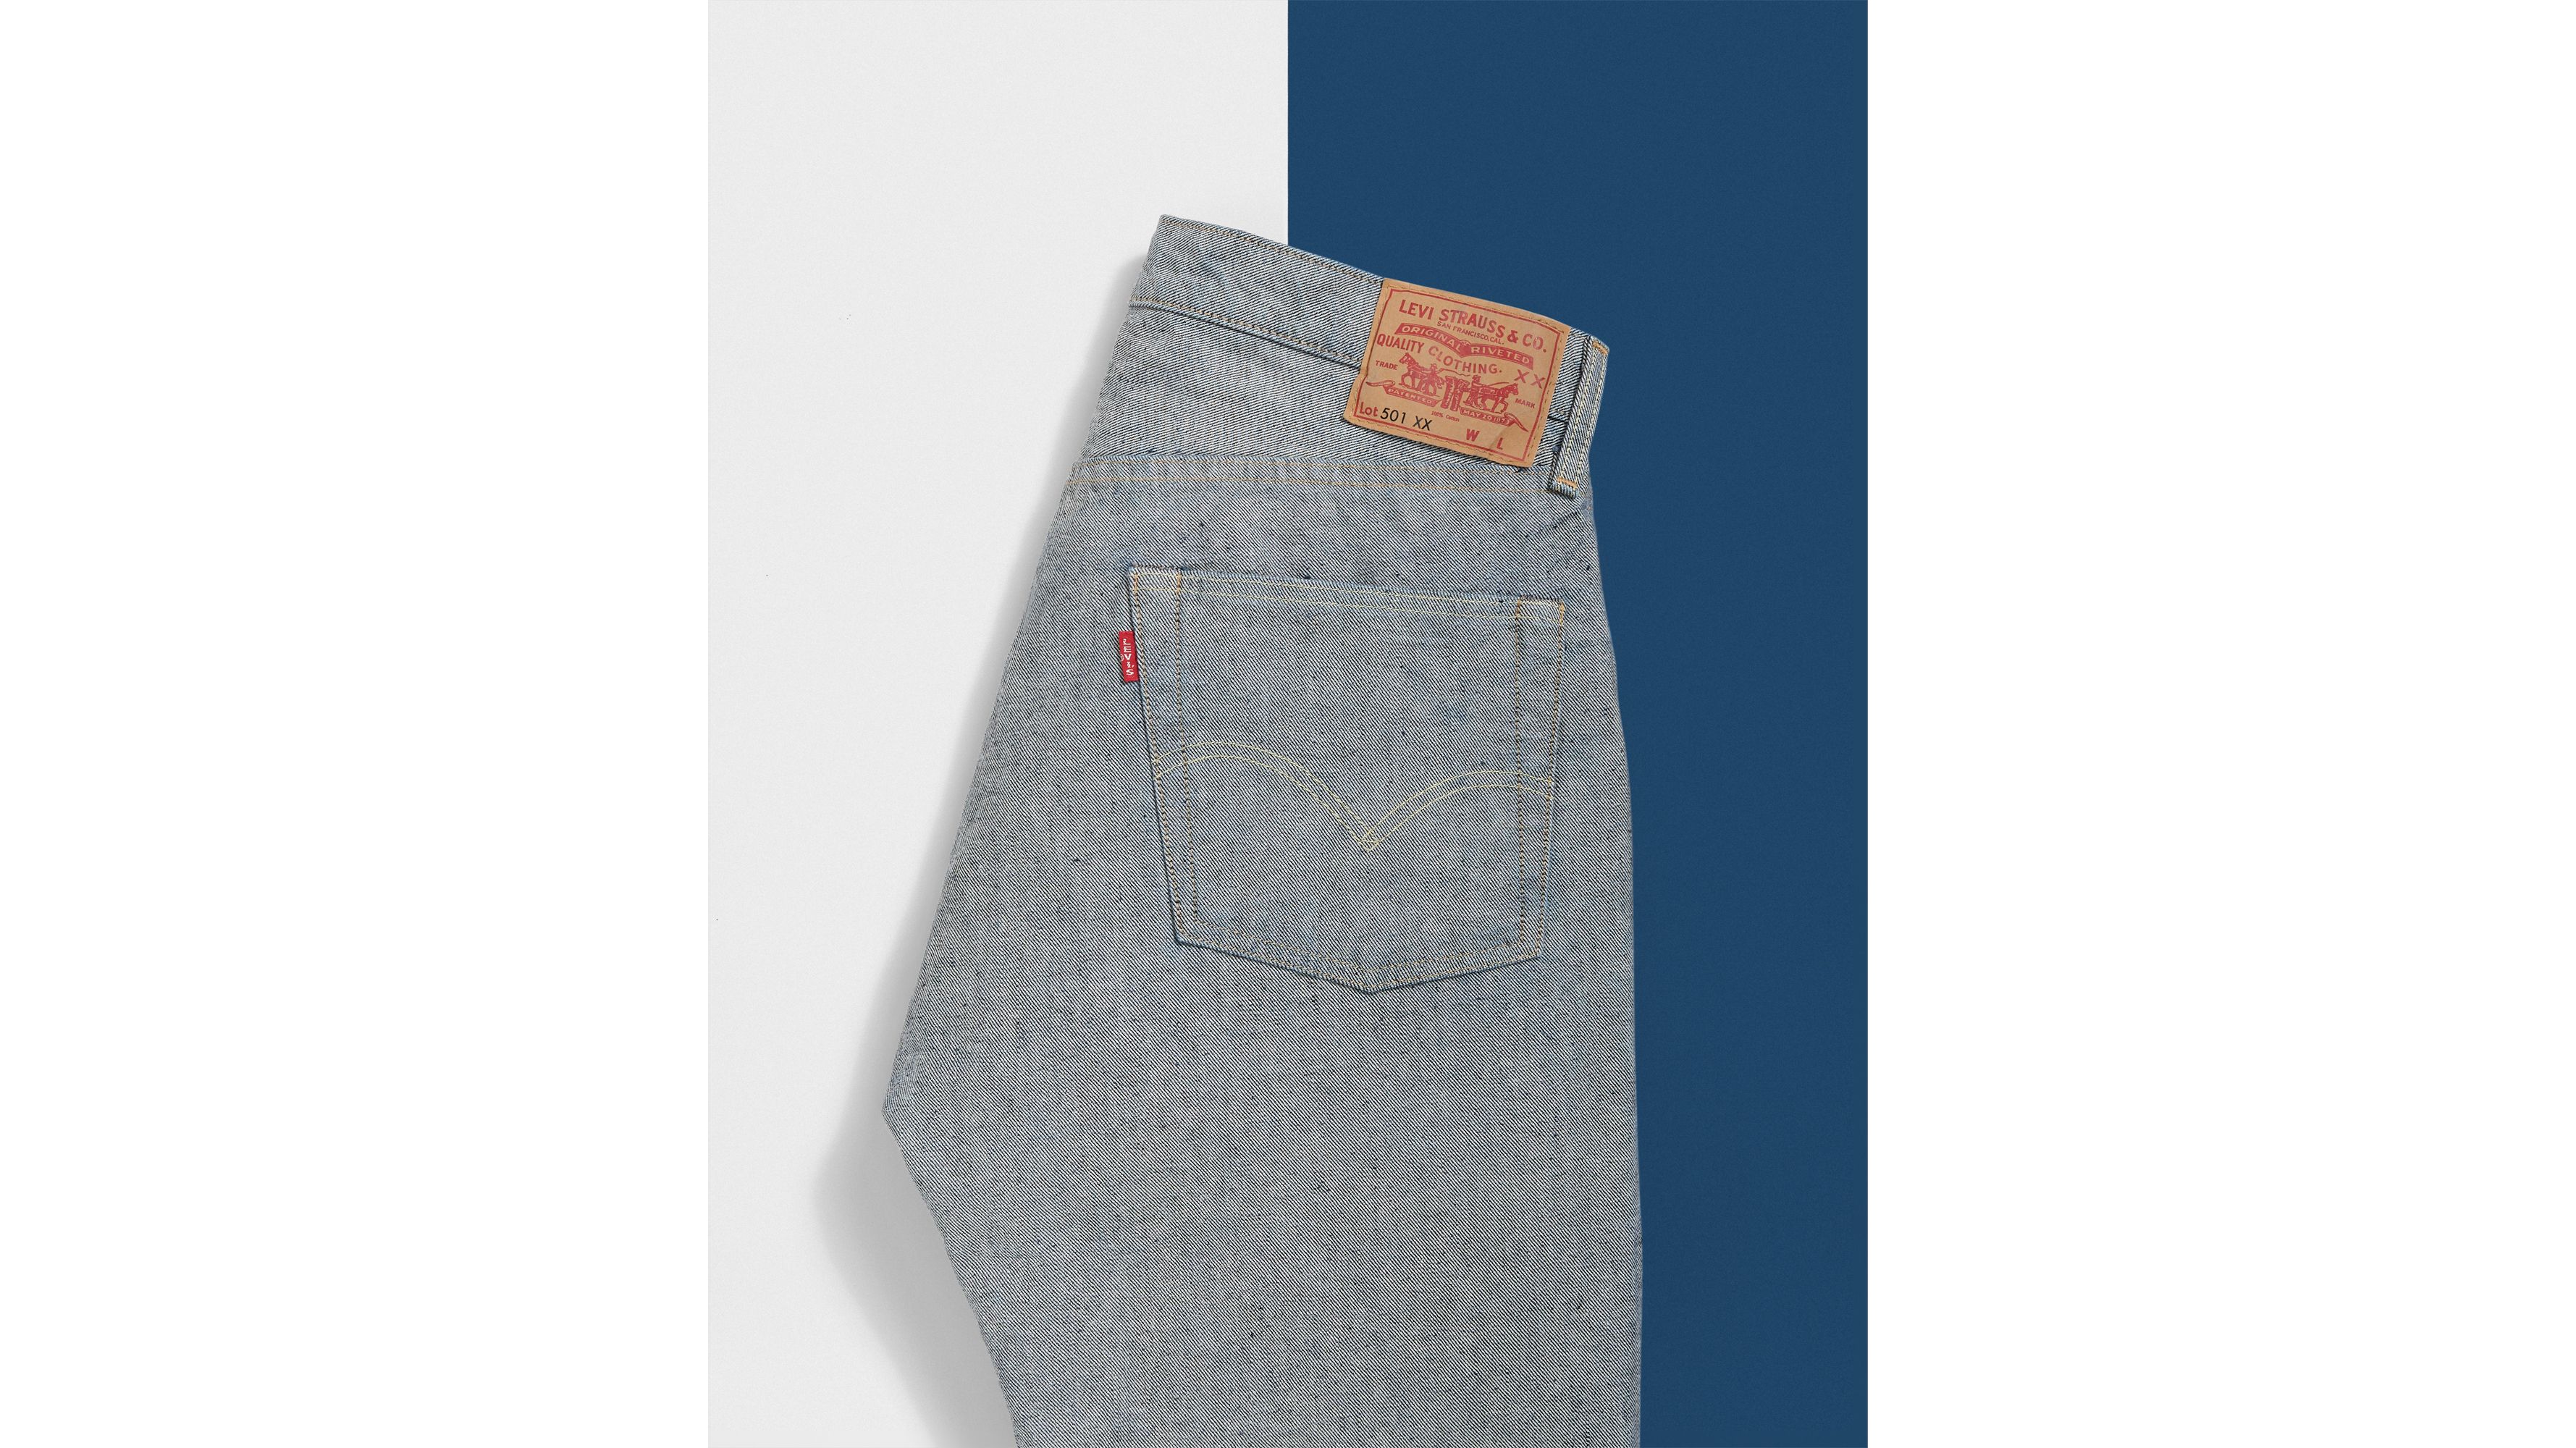 Inside Out 501® Men's Jeans - Dark Wash | Levi's® US